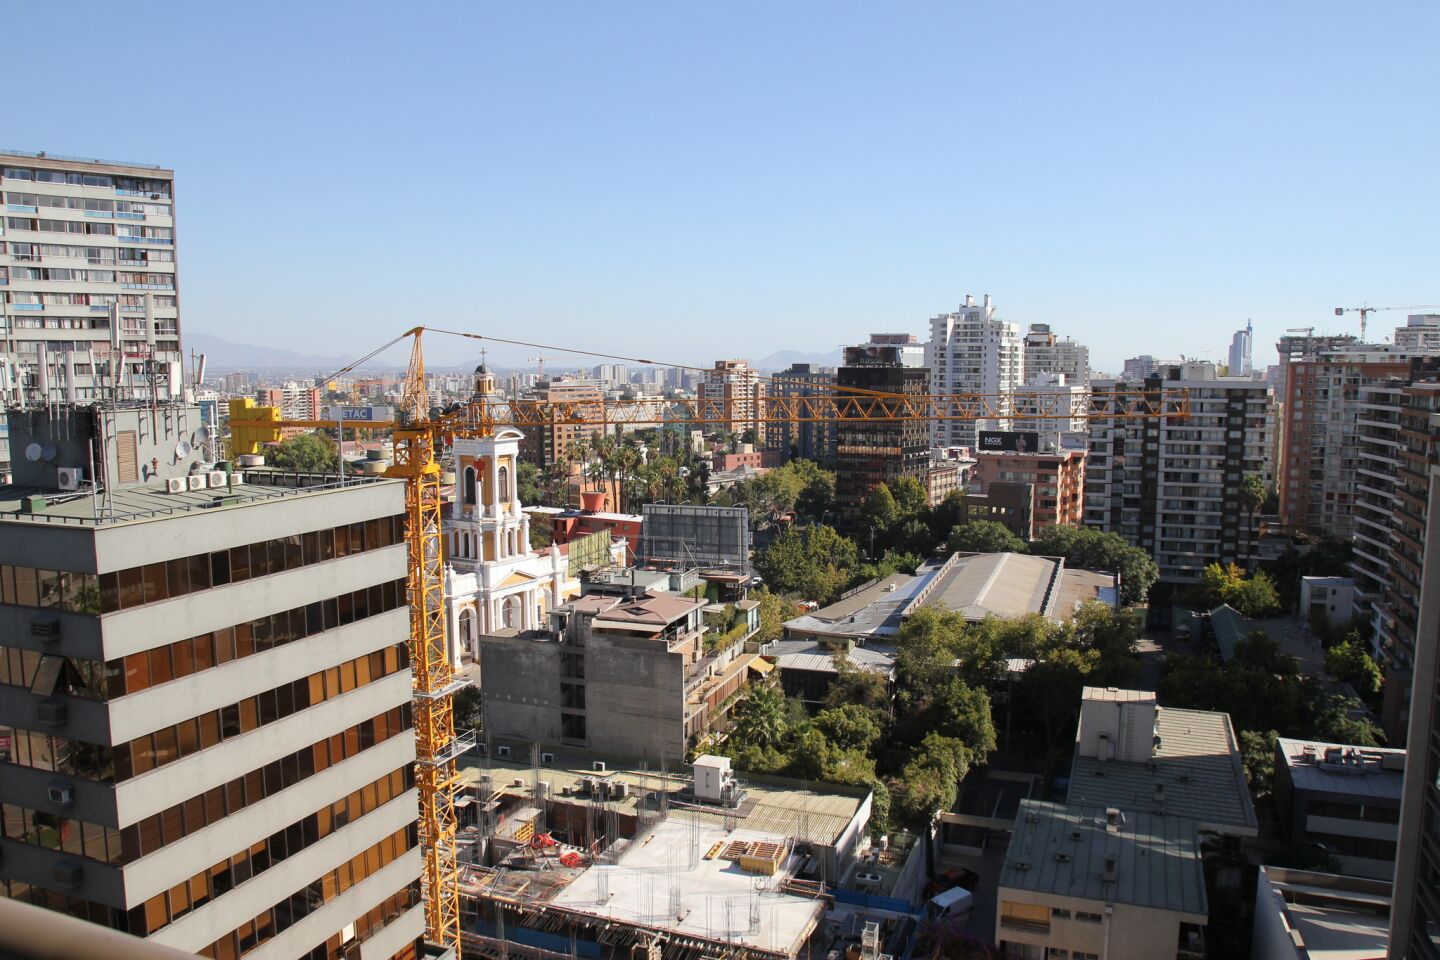 The Santiago skyline